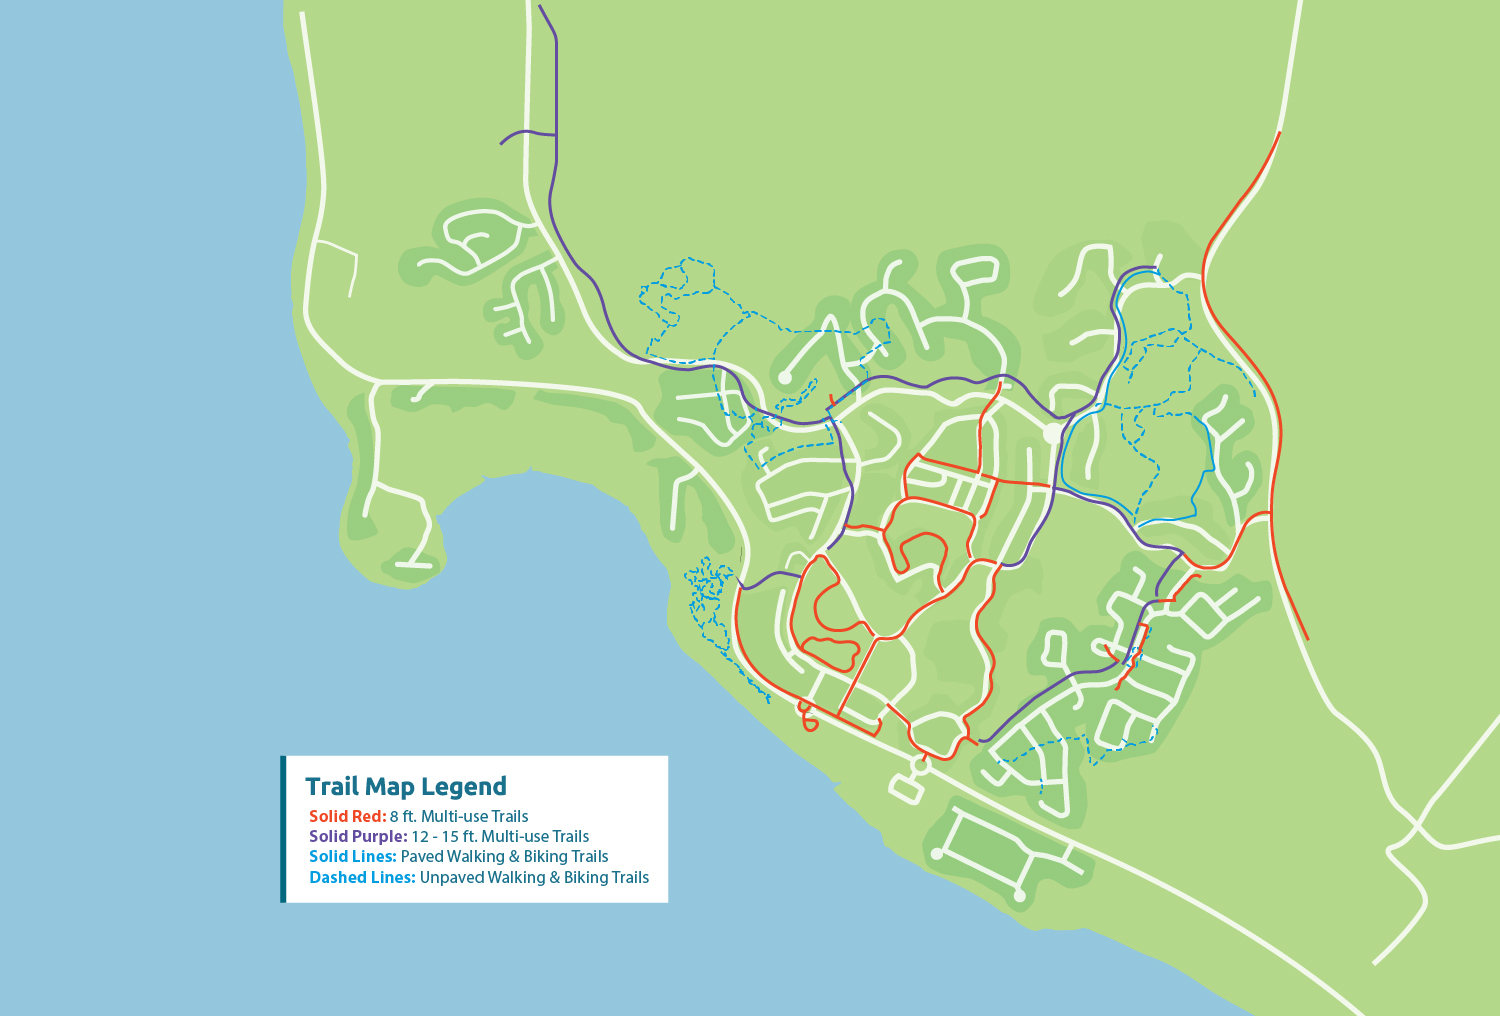 Trail Map Legend, Solid Red: 8ft. multi-use trails. Solid Purple: 12-15 ft. multi-use trails. Solid Lines: paved walking & biking trails. Dashed Lines: unpaved walking & biking trails.